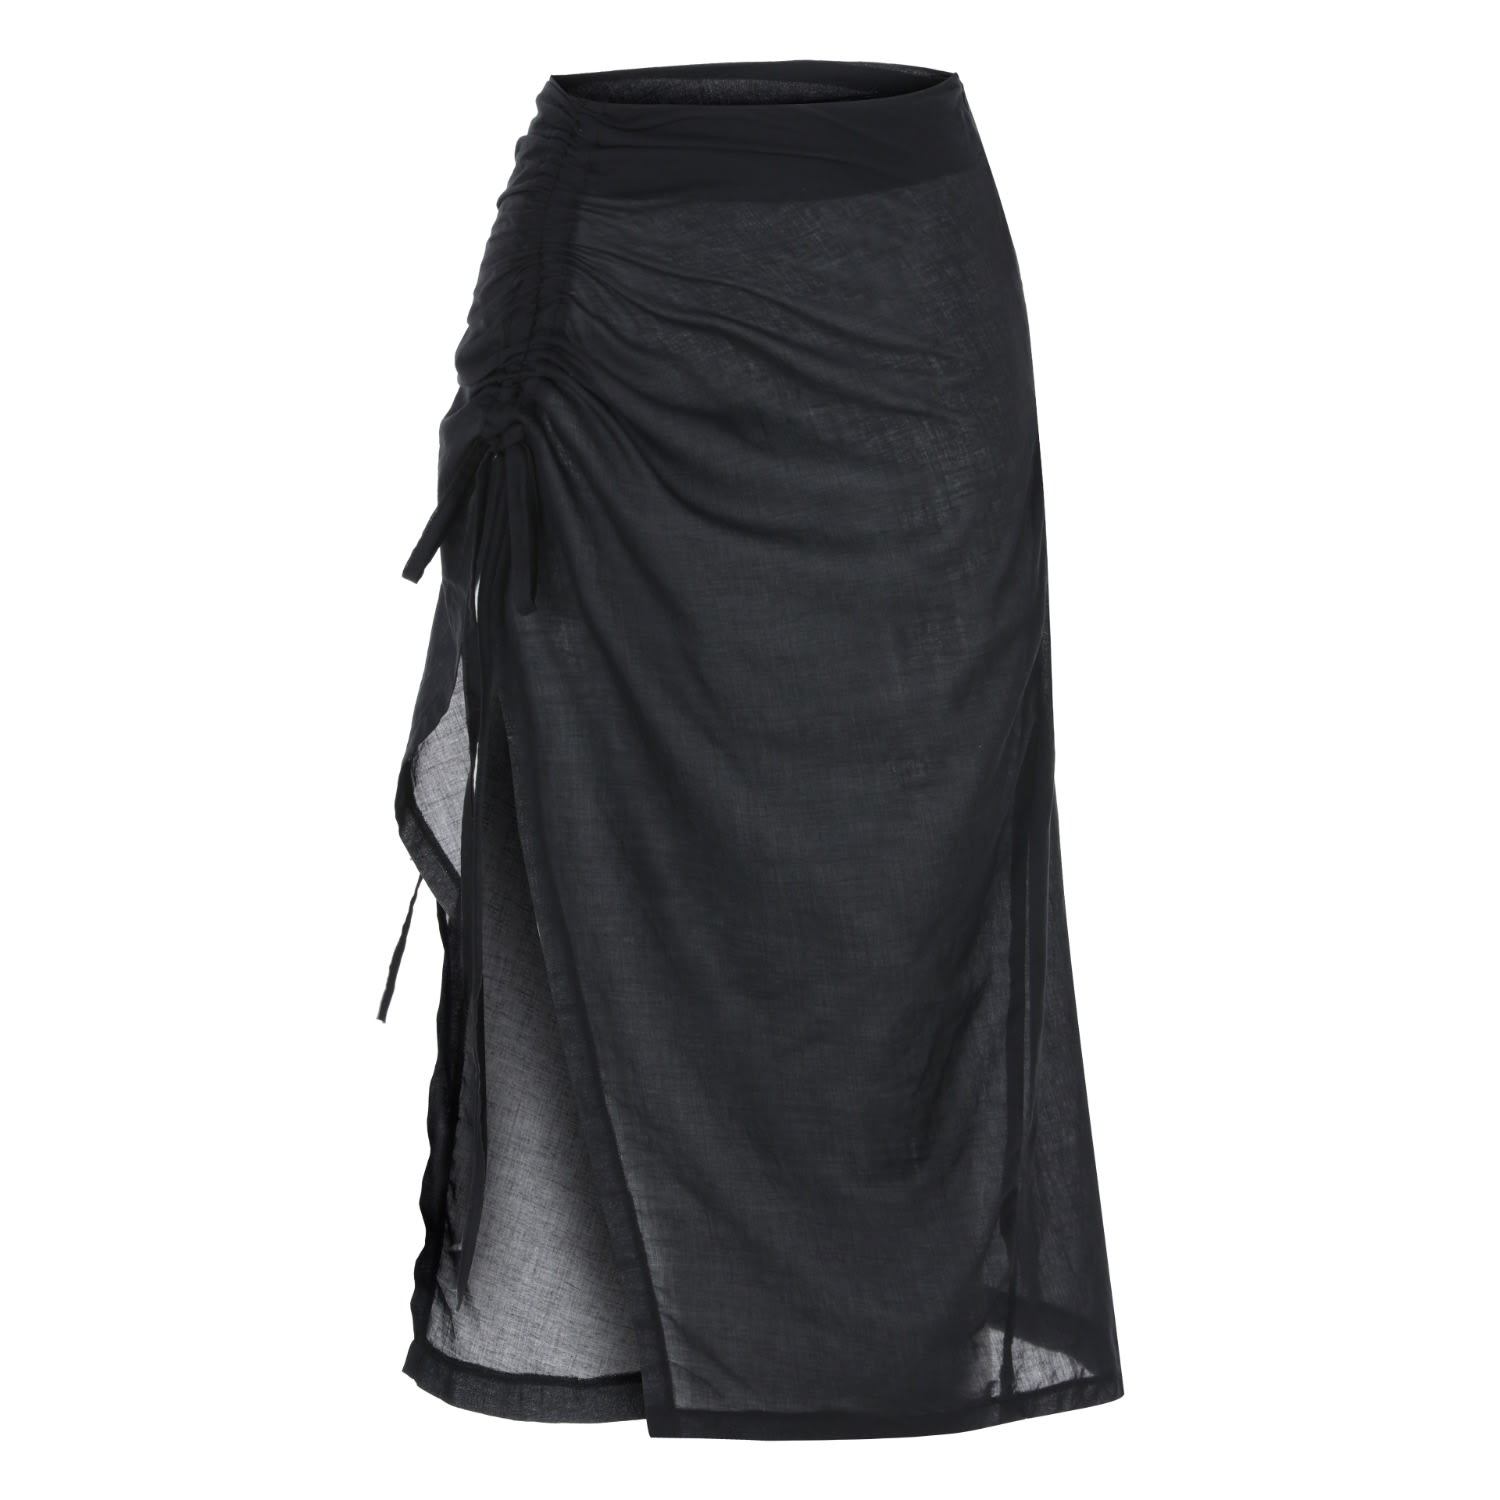 Seliarichwood Women's Midi Beach Skirt Black